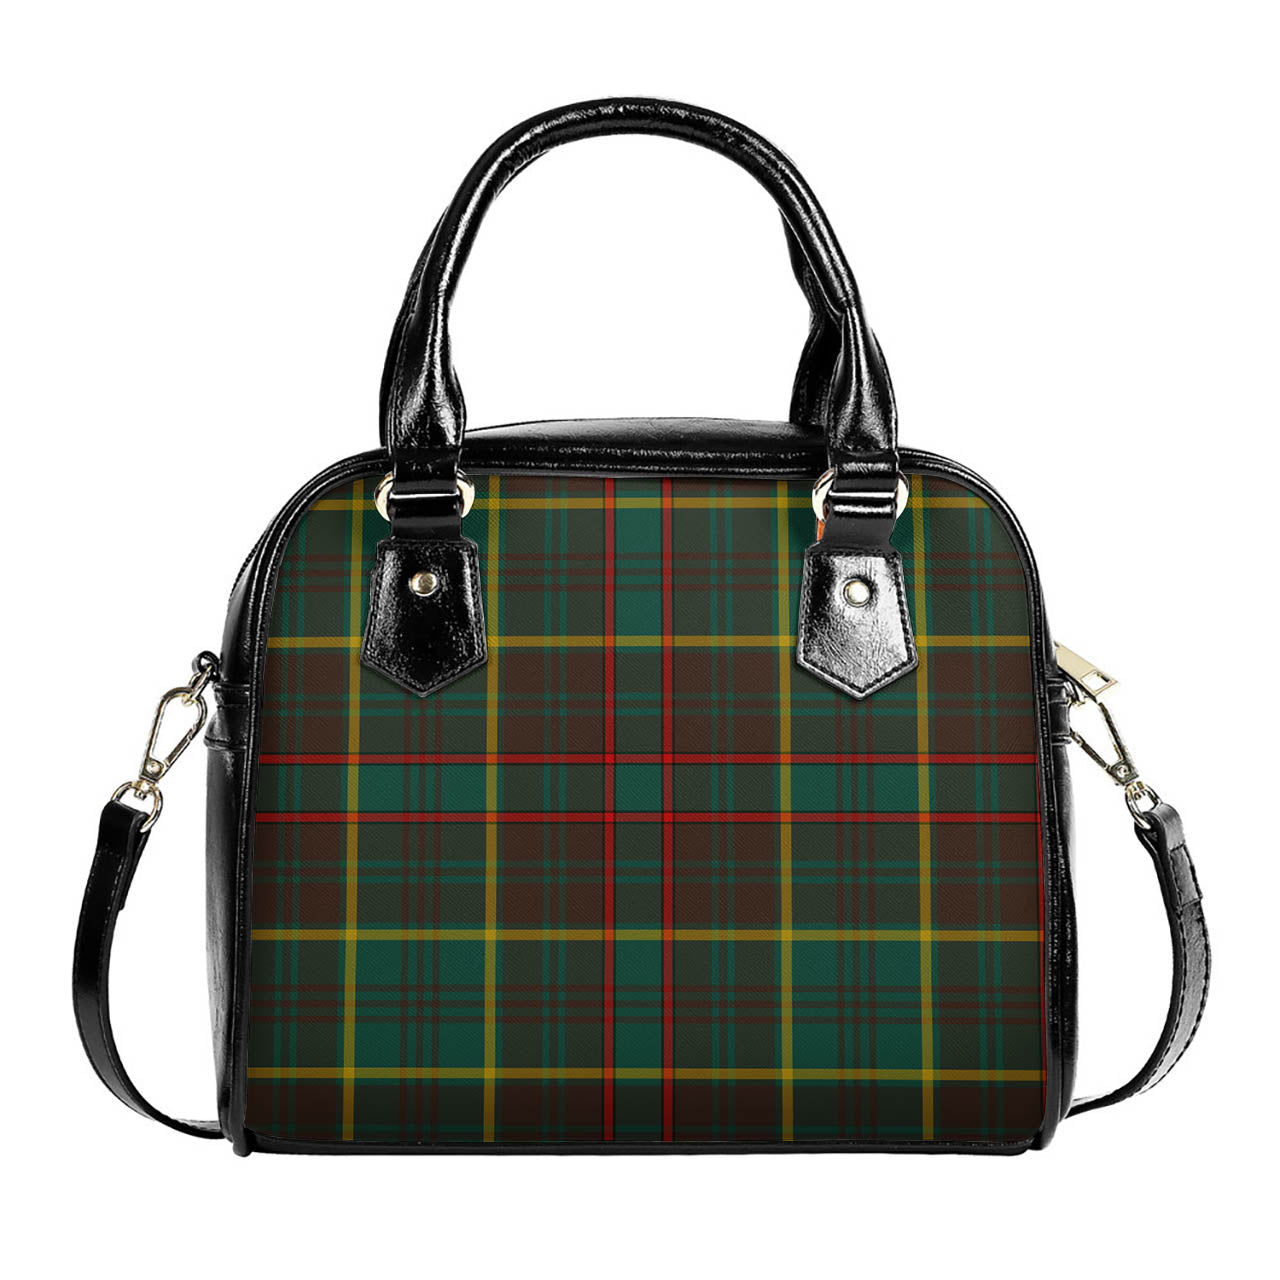 Ontario Province Canada Tartan Shoulder Handbags One Size 6*25*22 cm - Tartanvibesclothing